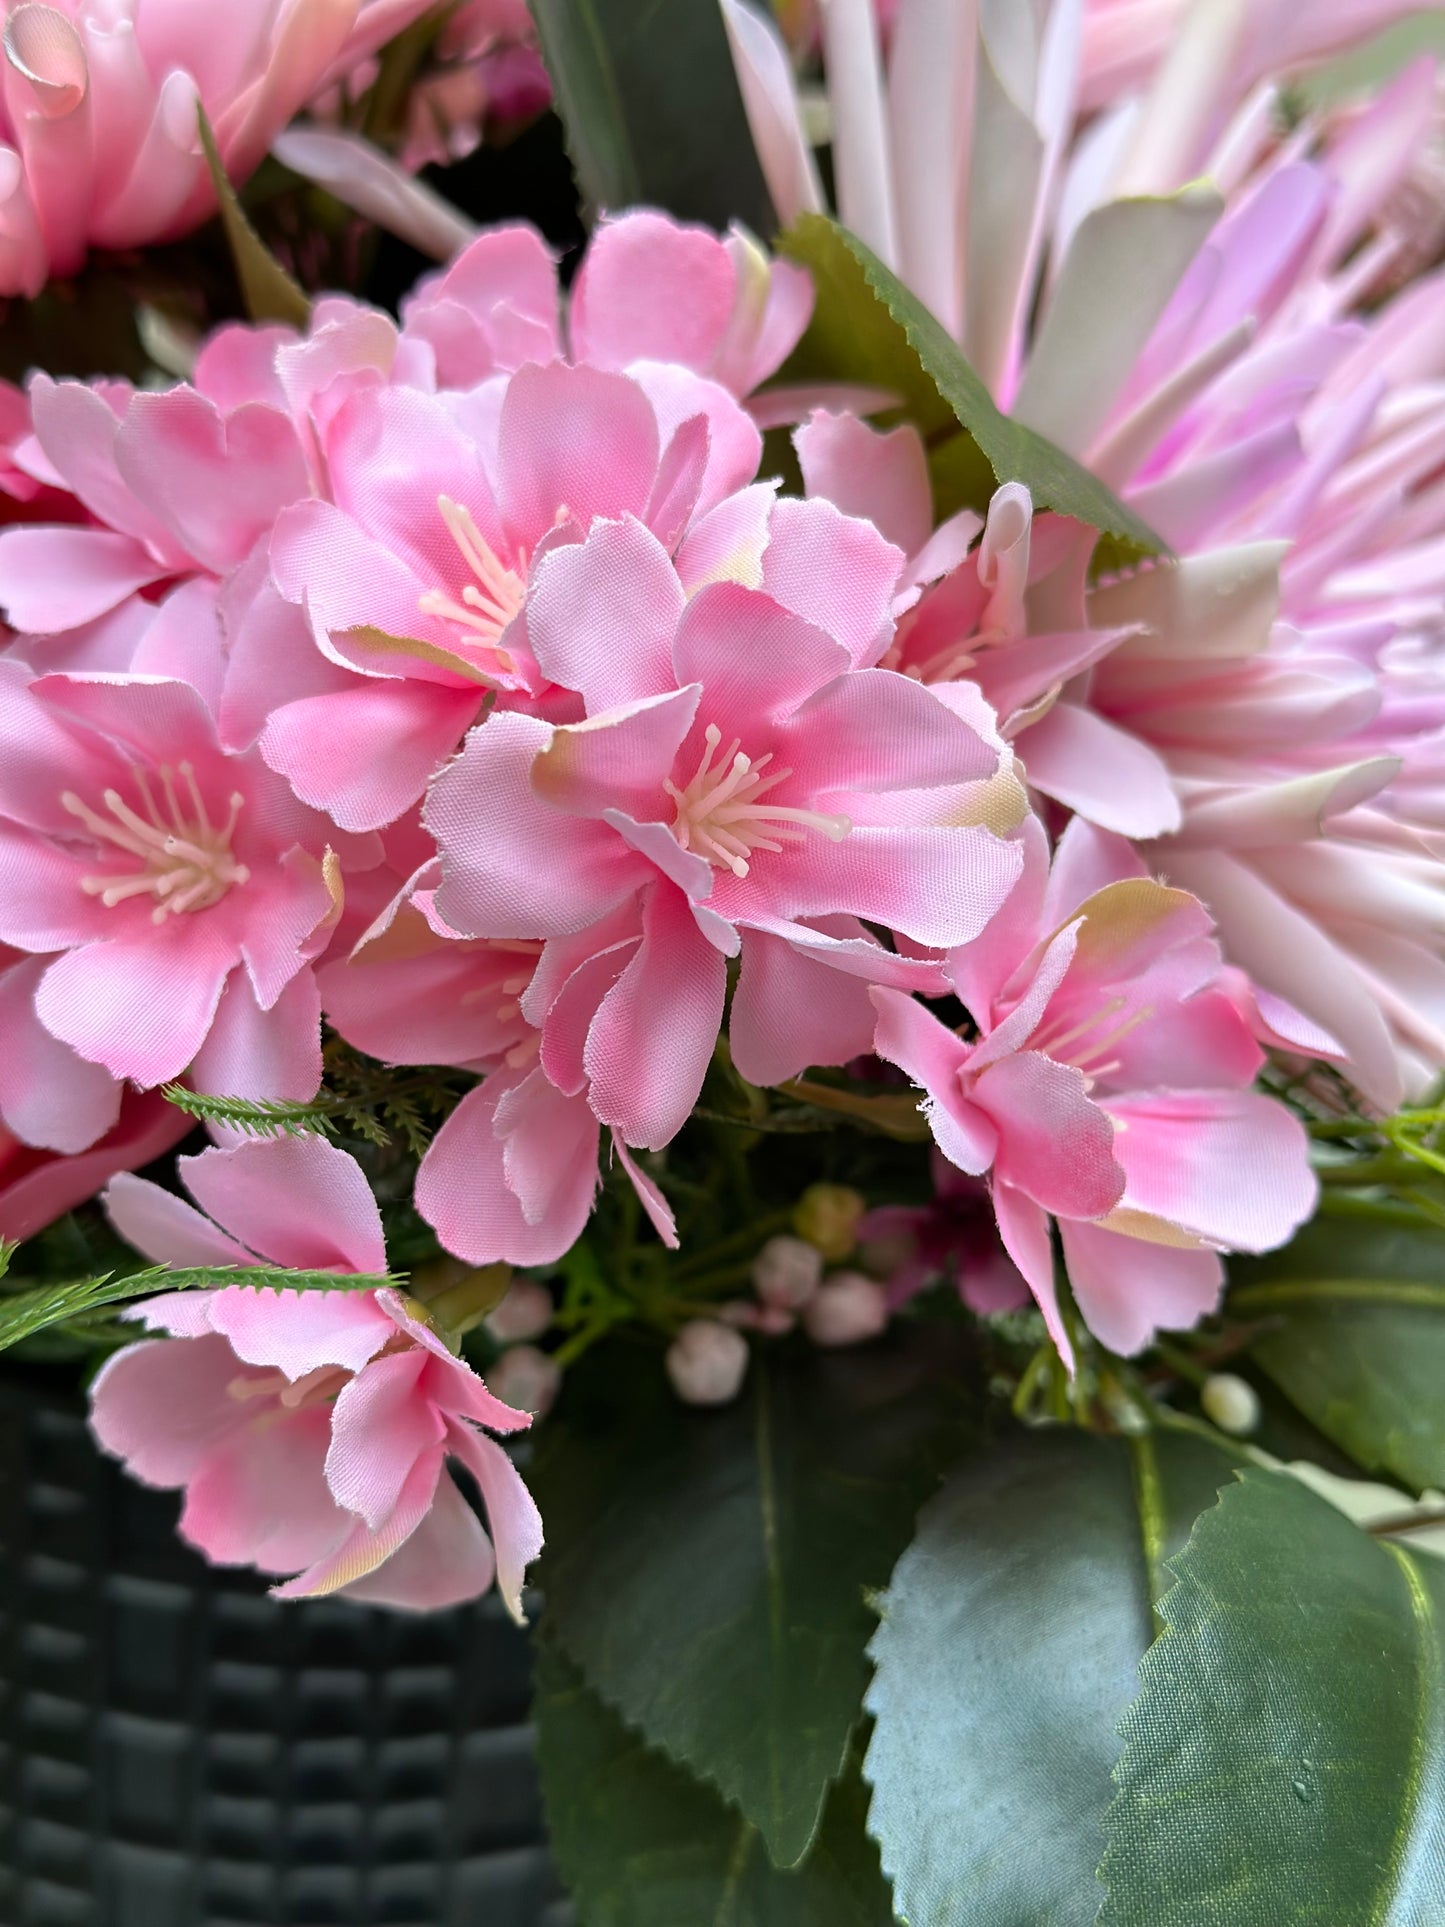 The Raspberry Sorbet Floral Arrangement